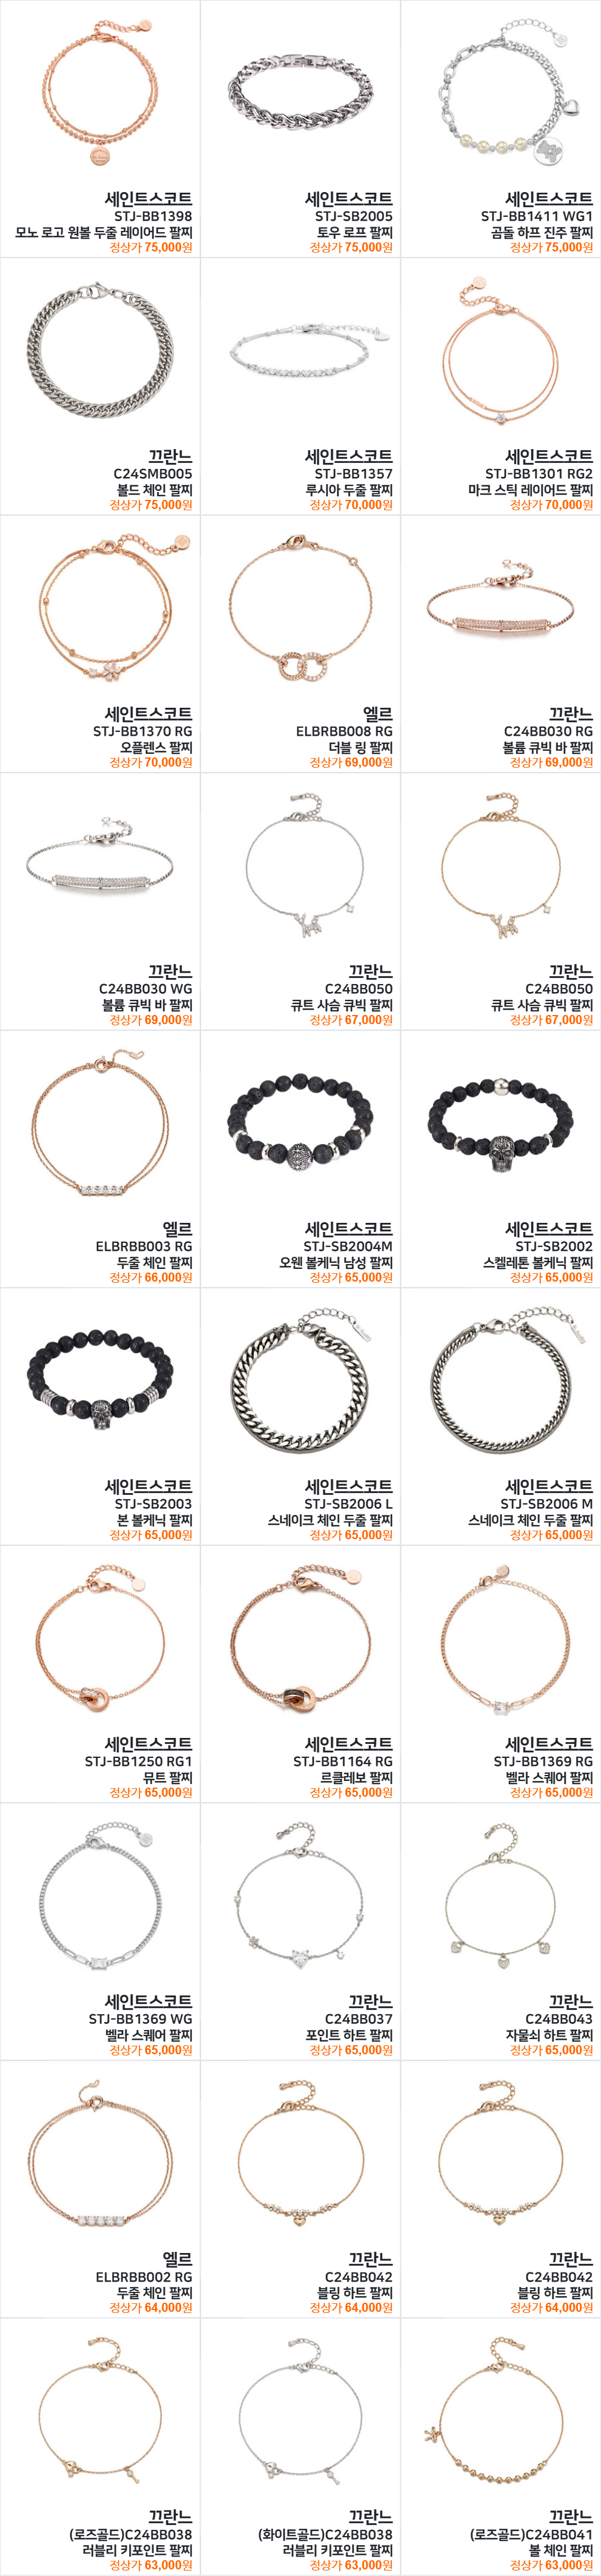 braceletproduct4.png